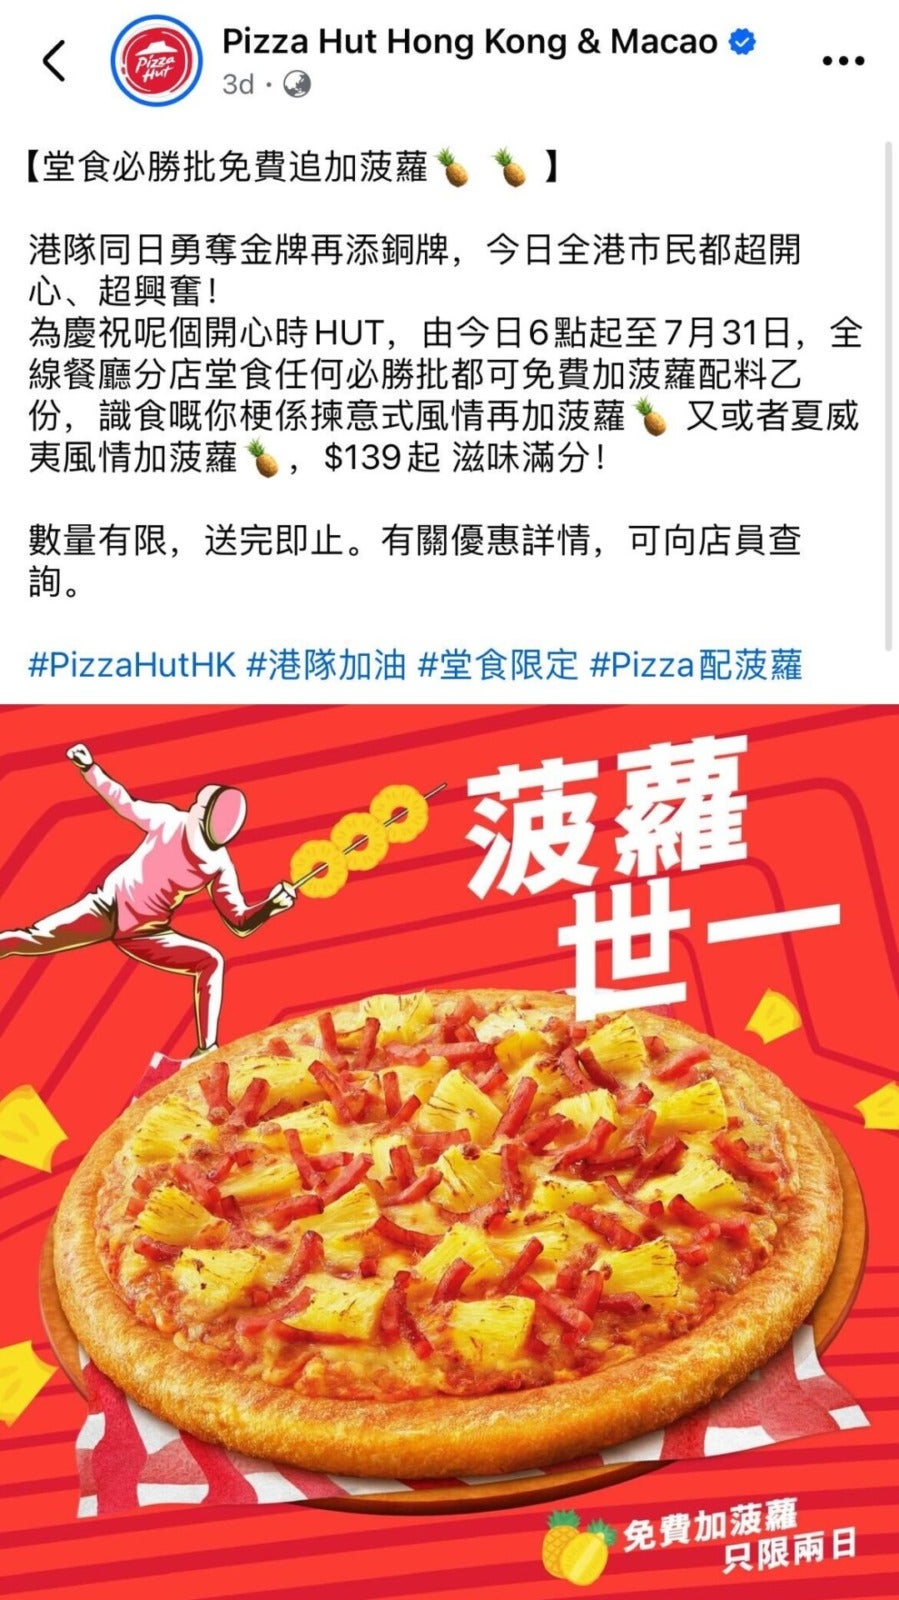 Hong Kong Pizza Hut Free Add On Pineapple